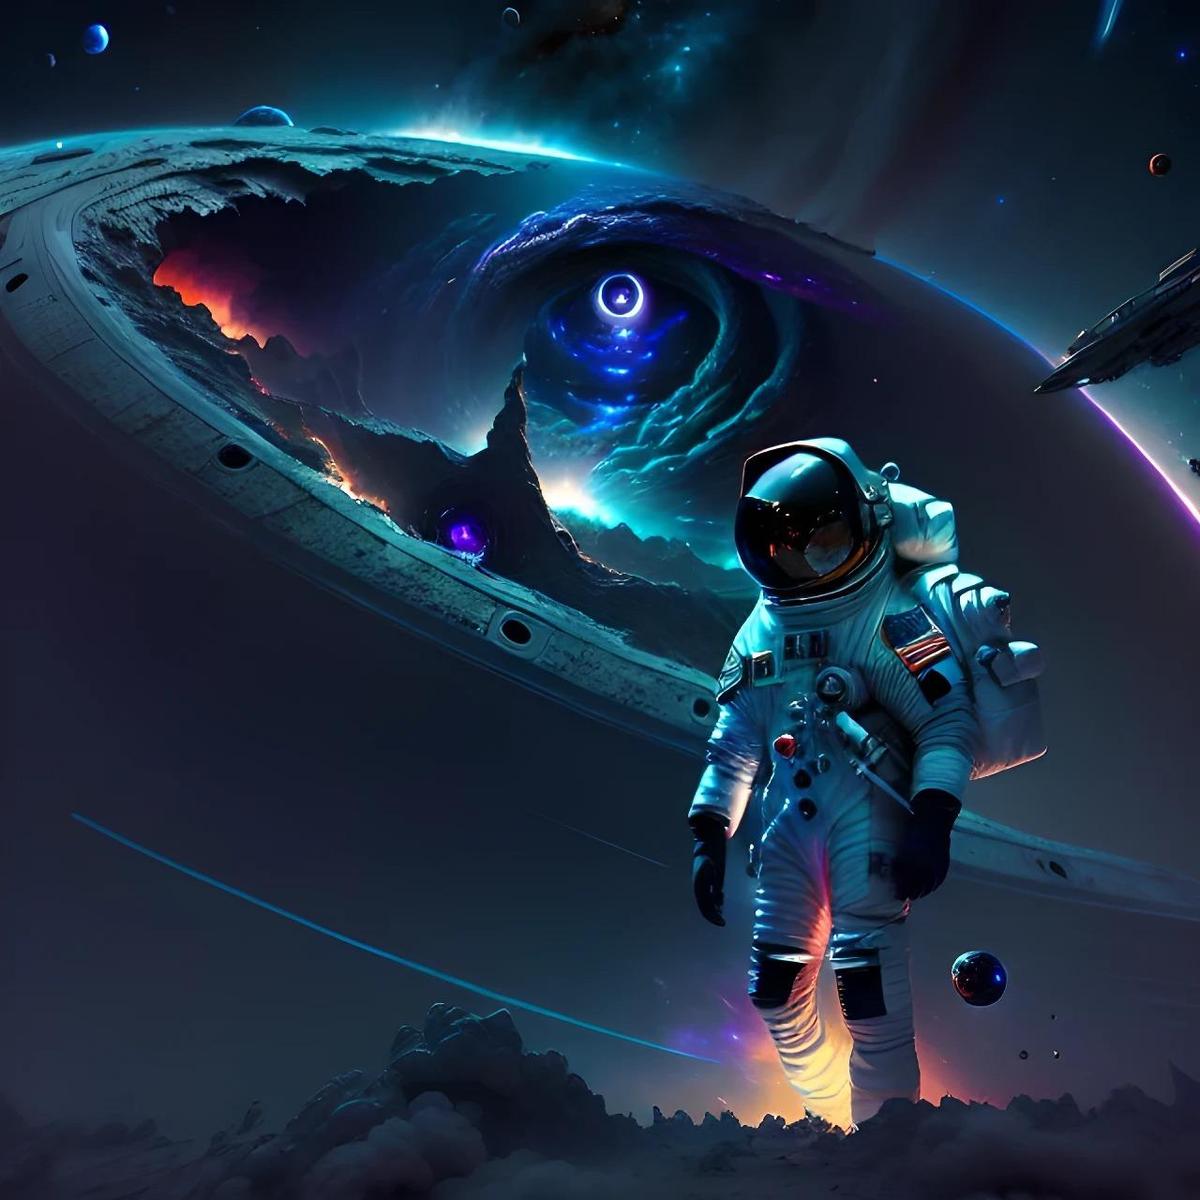 photograph of an astronaut floating near